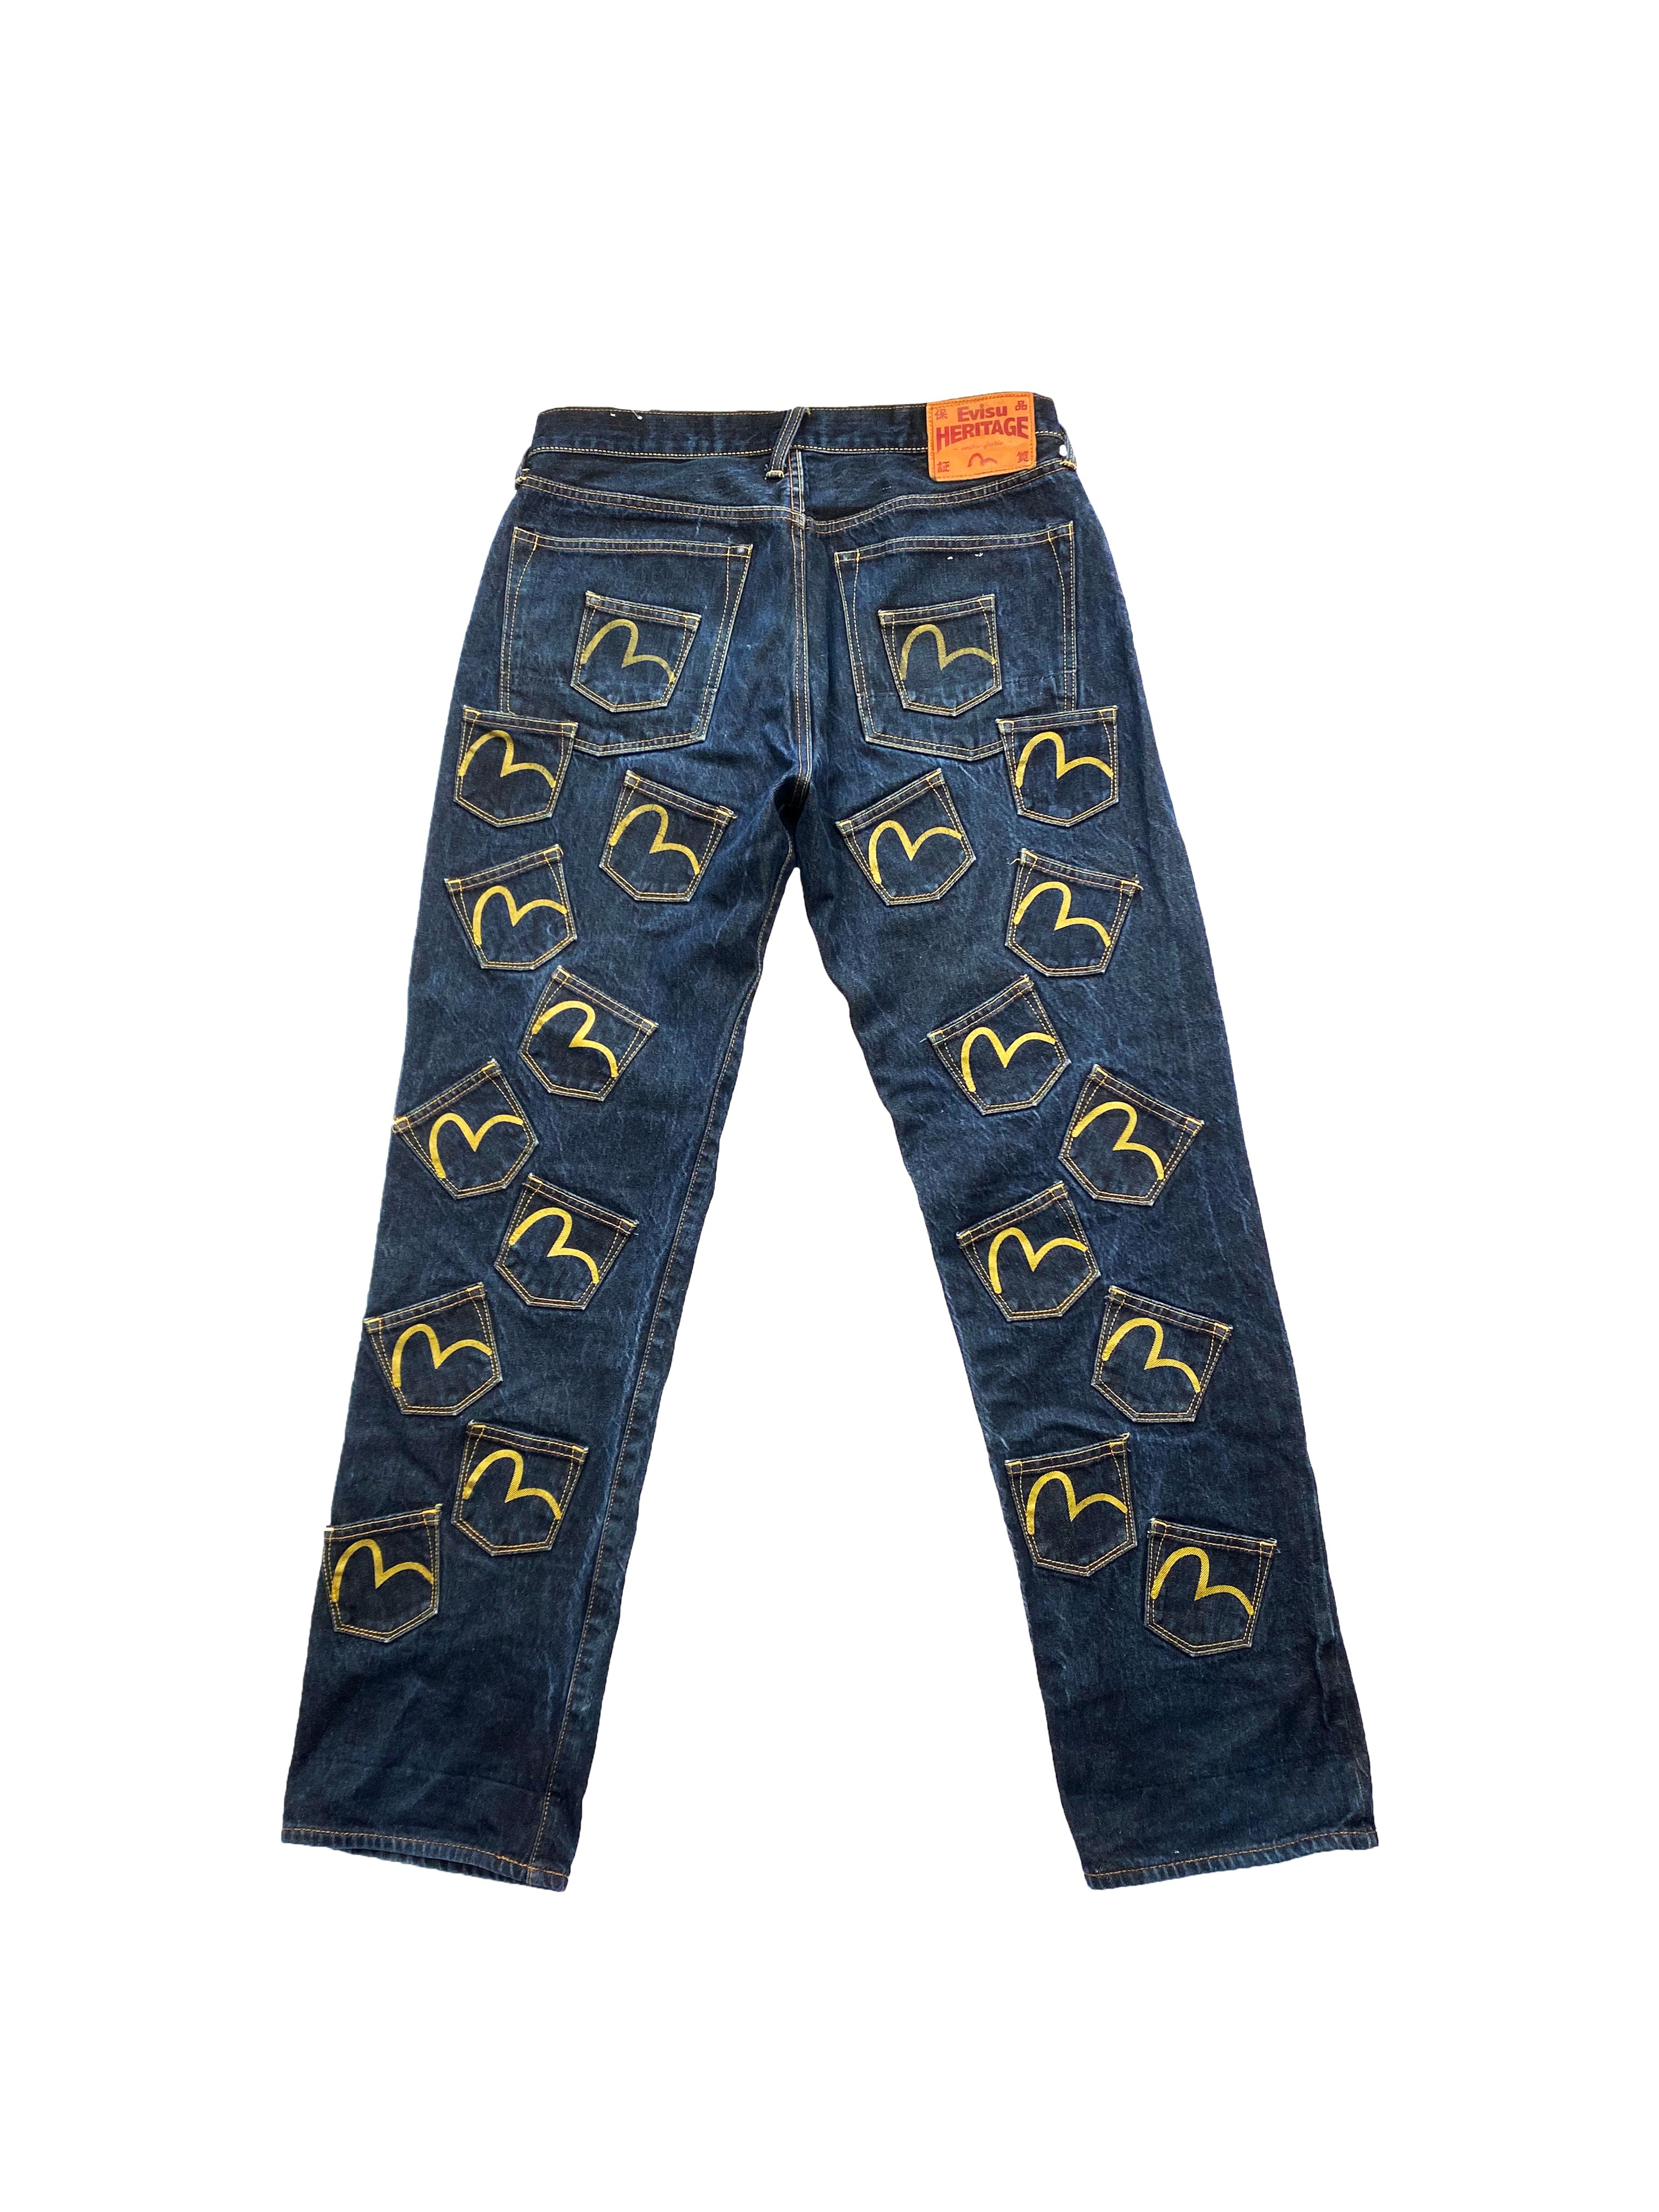 Evisu Multi Pocket Gold Gull Jeans 00's